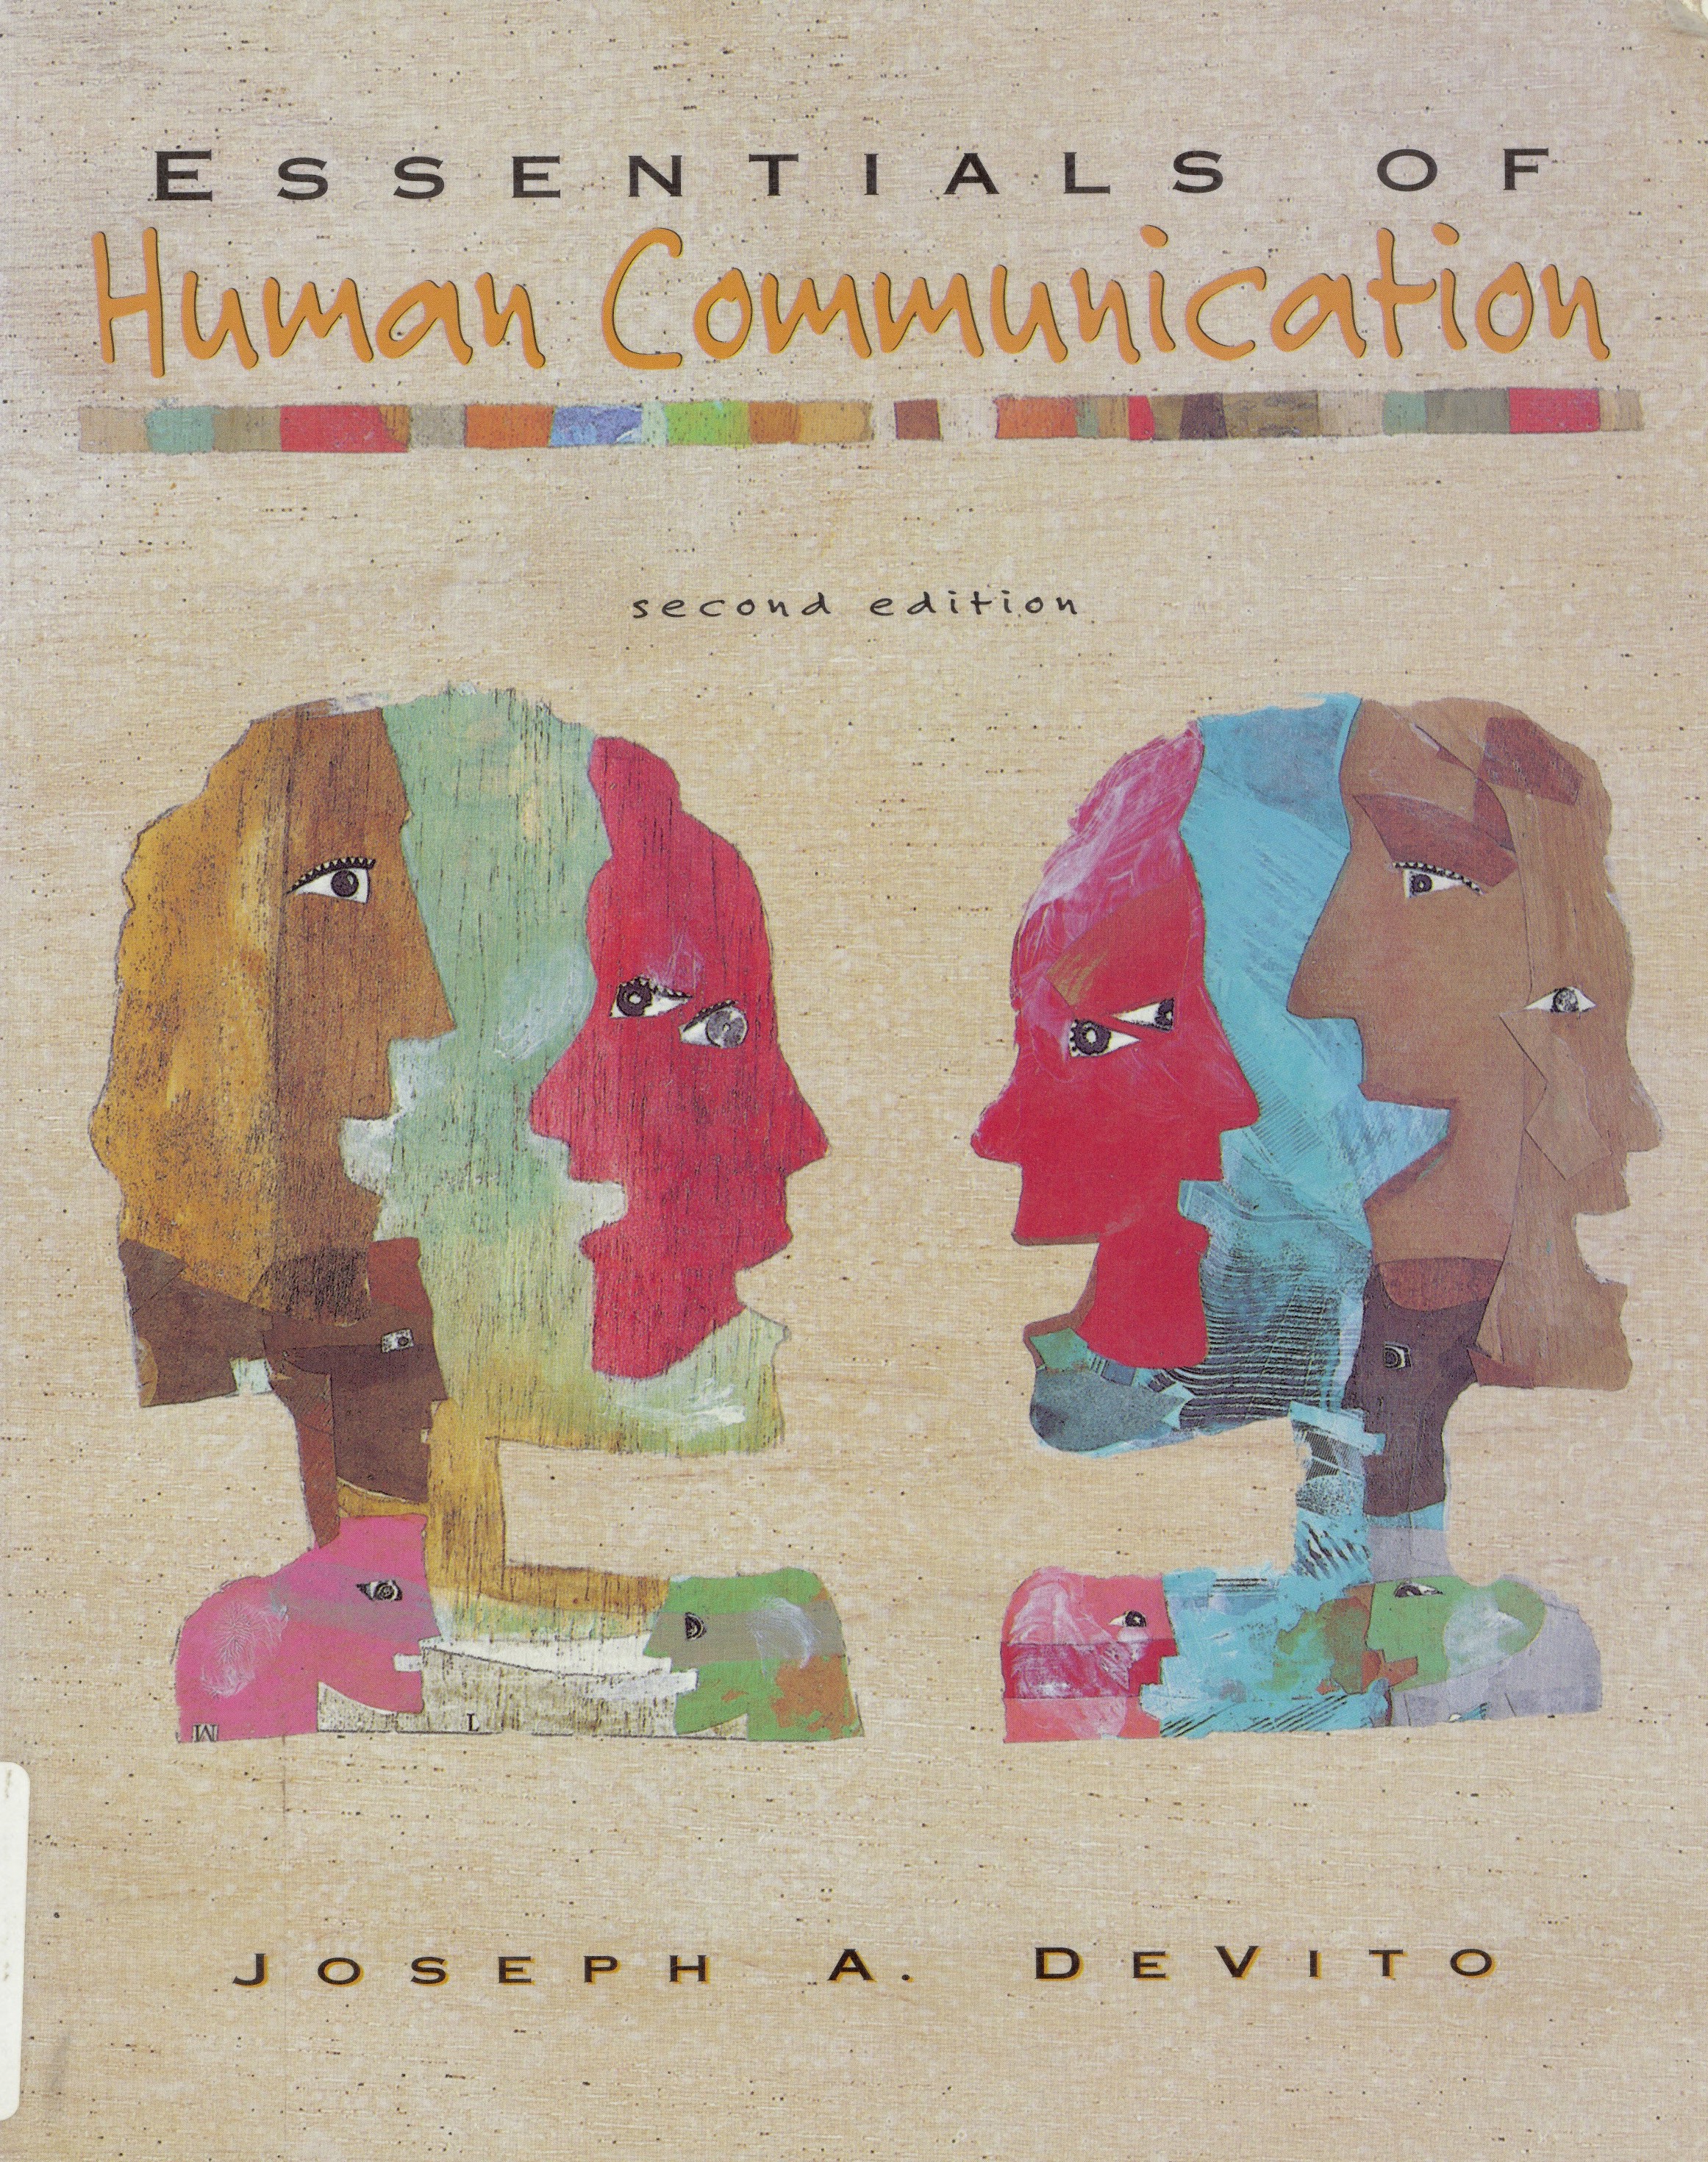 Essentials of human communication